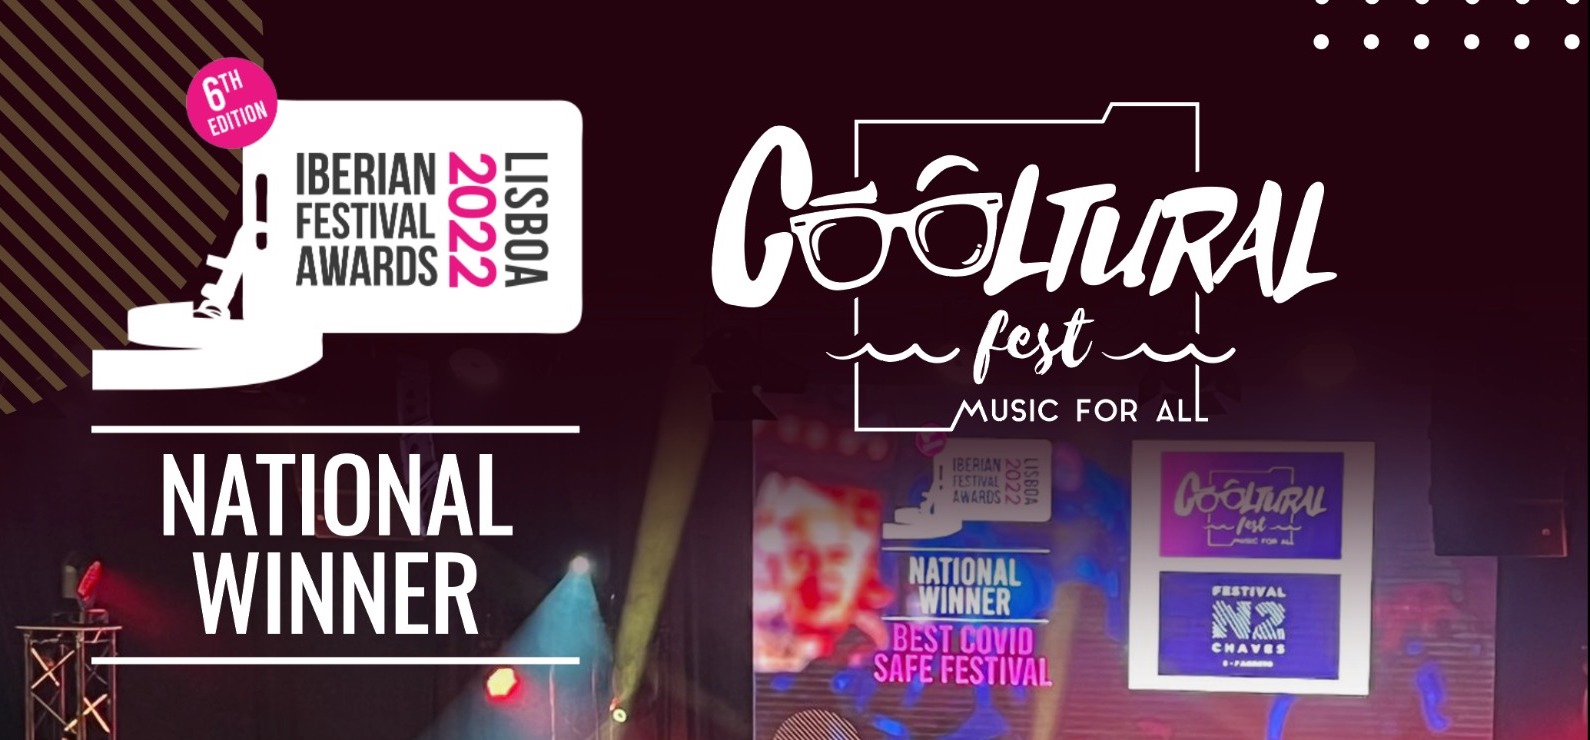 Cooltural Fest, premio Iberian Awards por ser el 